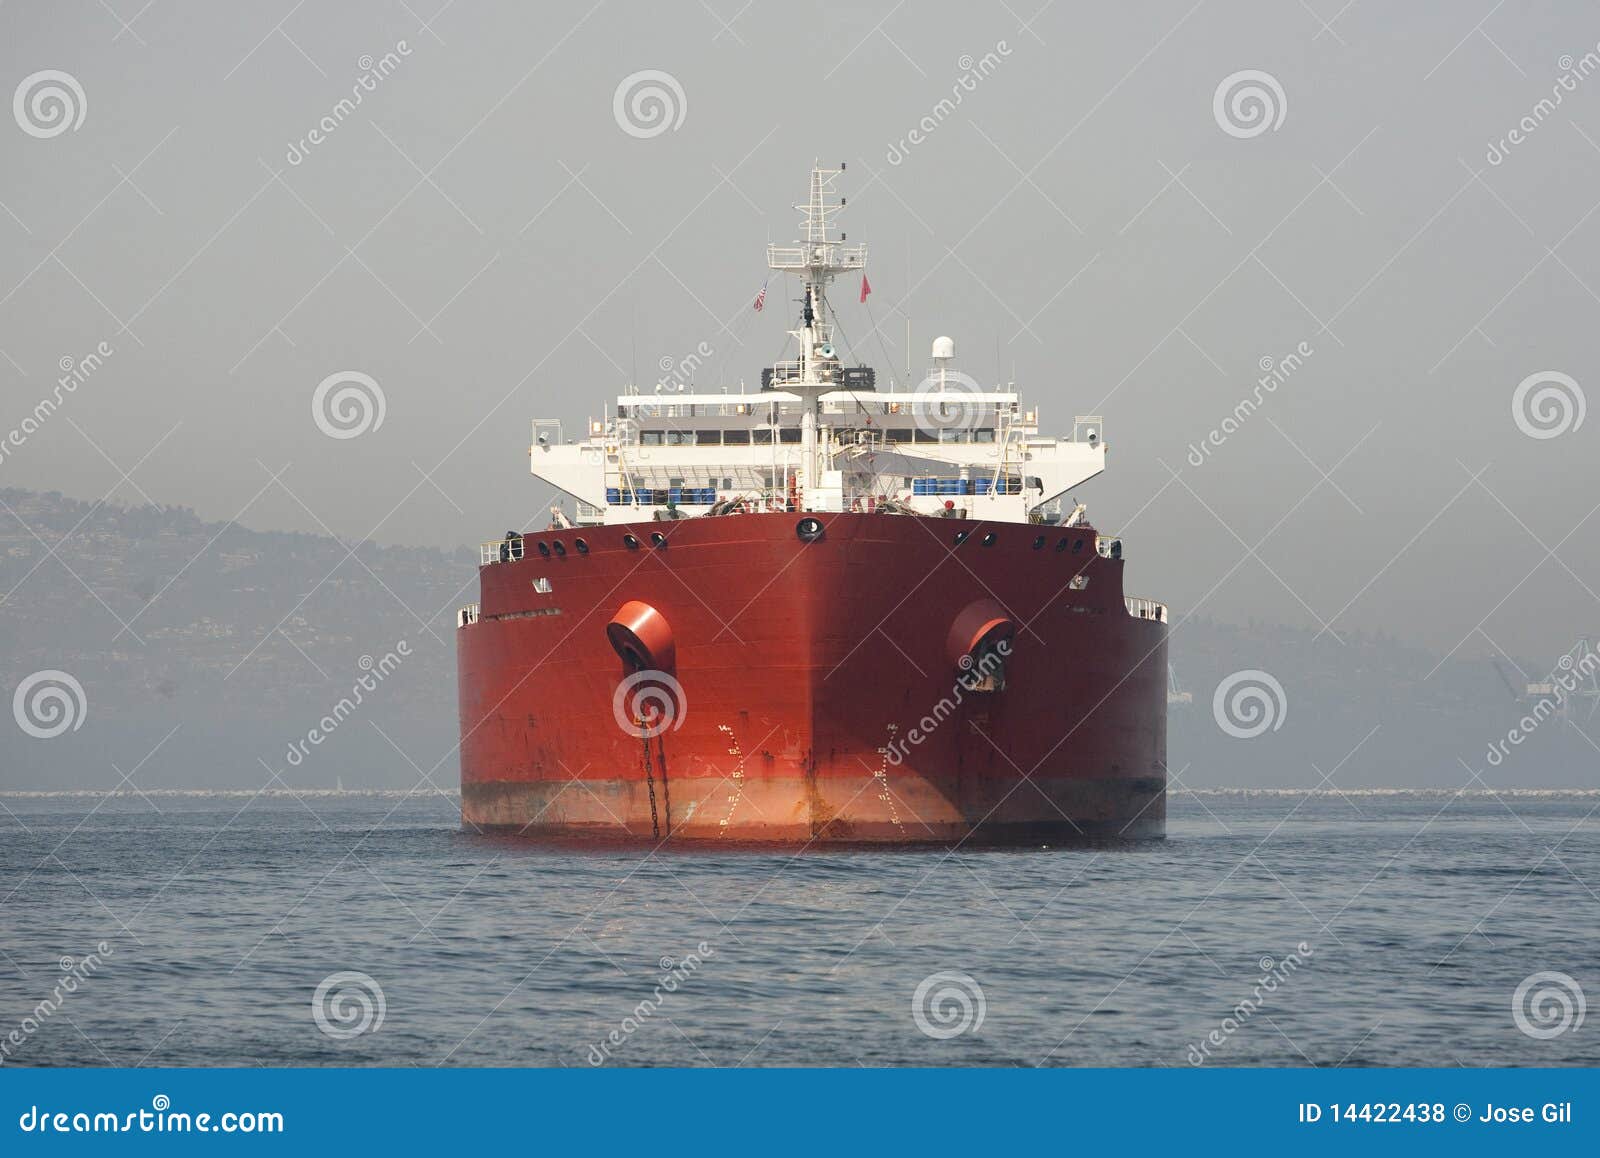 oil tanker front